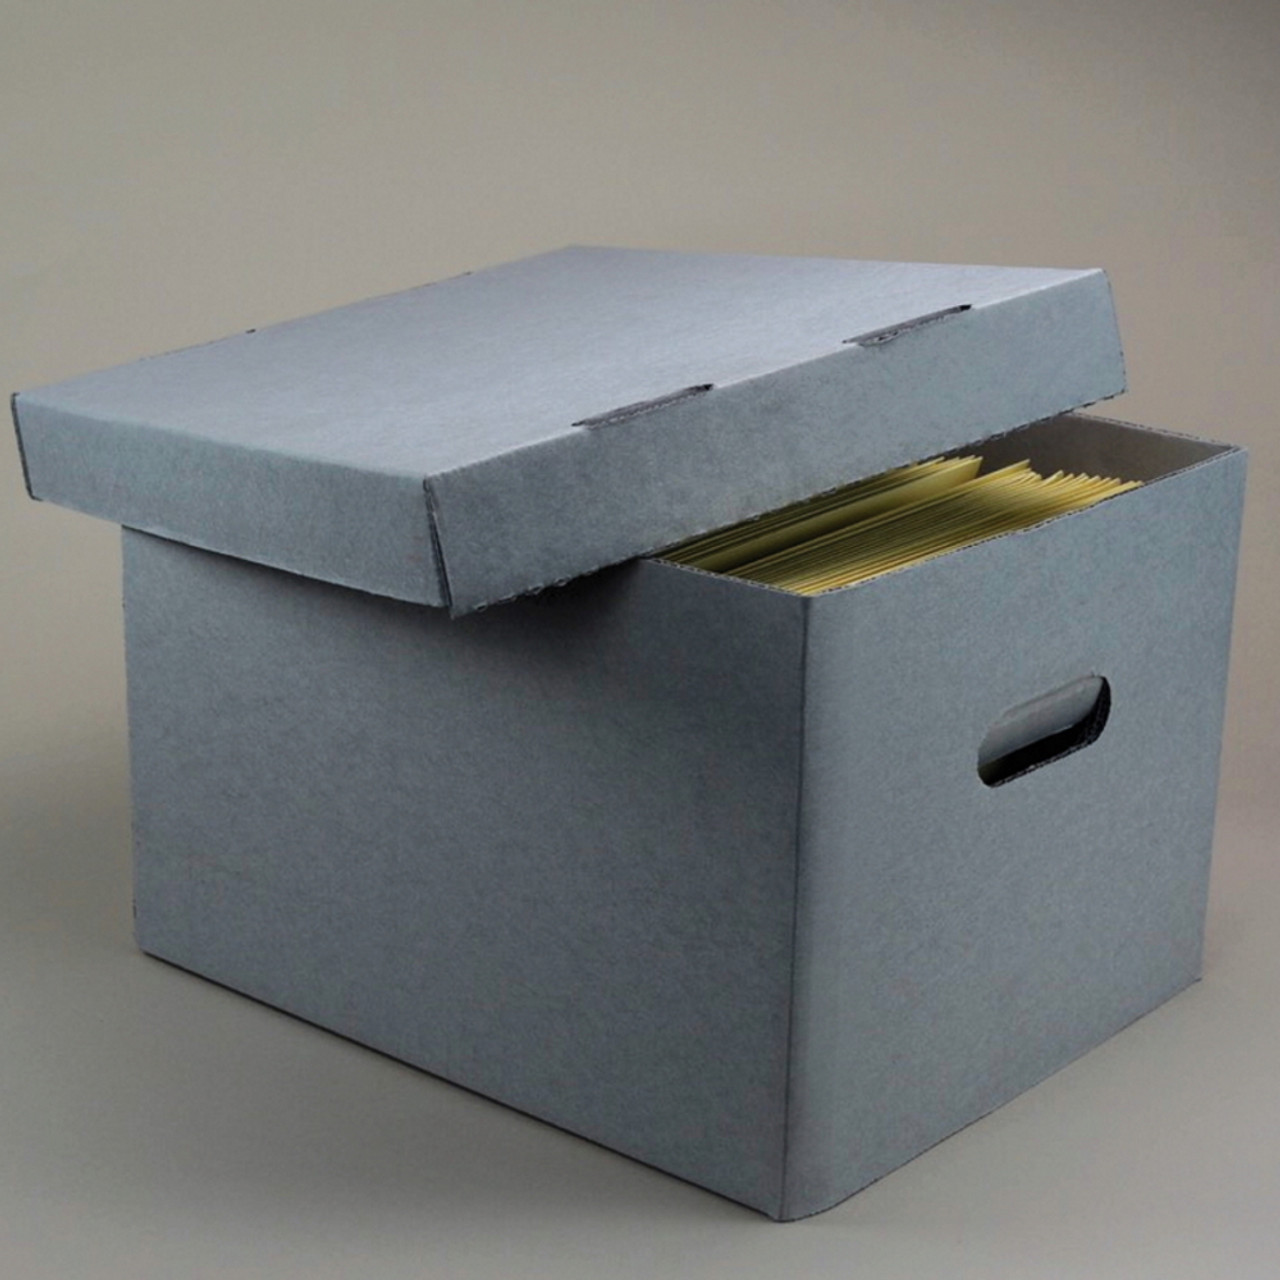 Archival Document Storage Boxes - The Hollinger Box - Hollinger Metal Edge